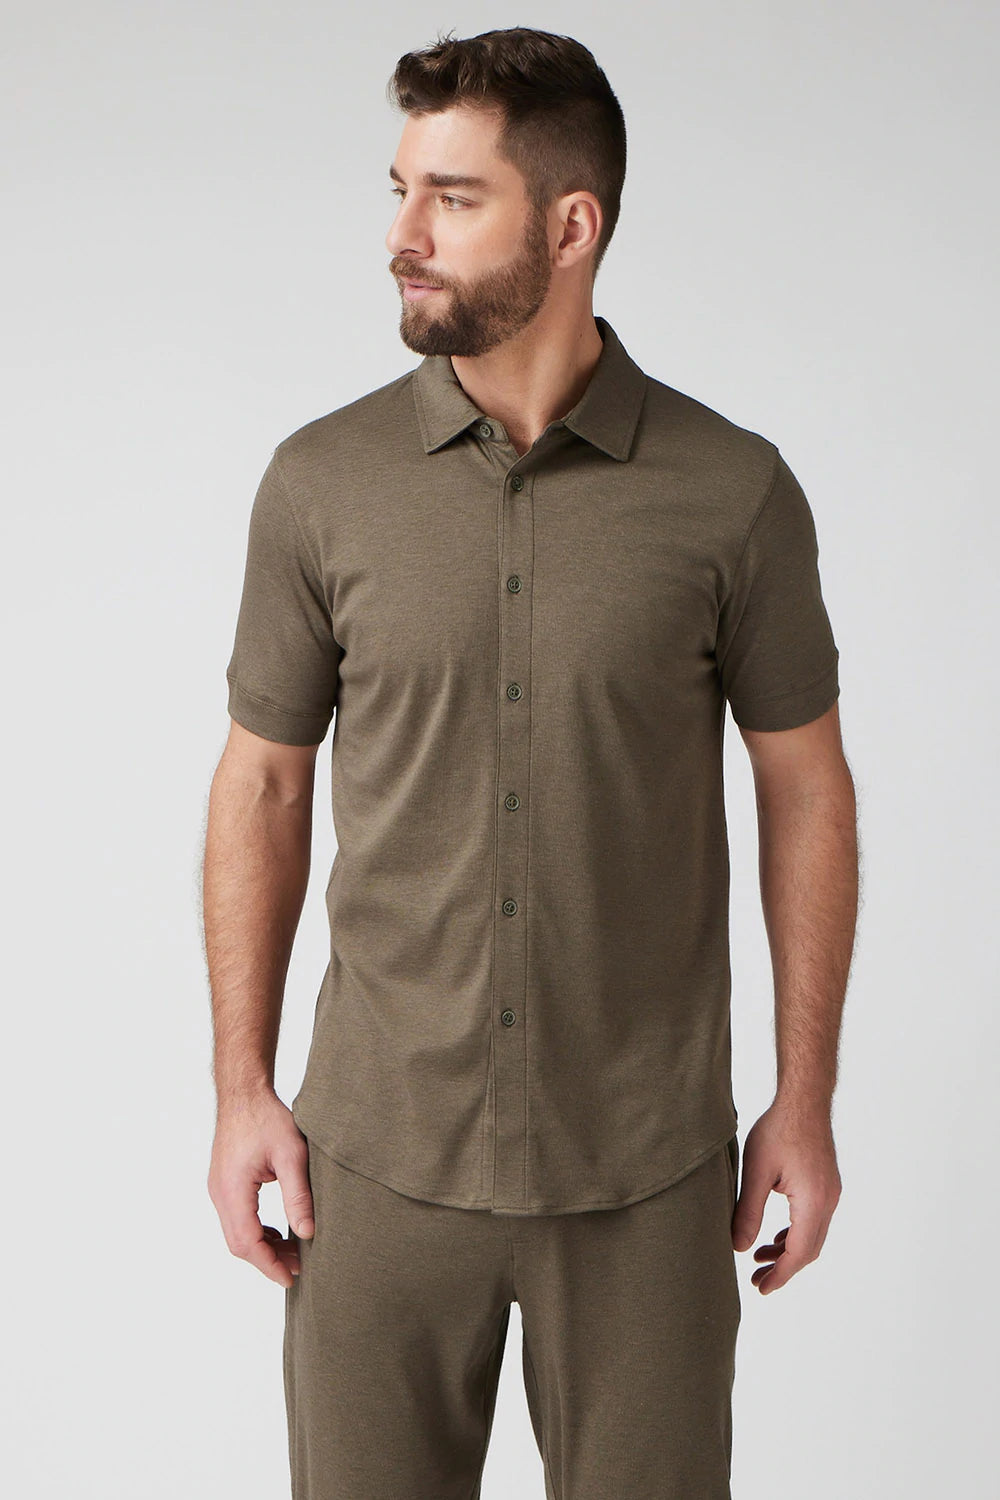 Buy army Raffi All Year Round Aqua Cotton Short Sleeve Button up RW22210